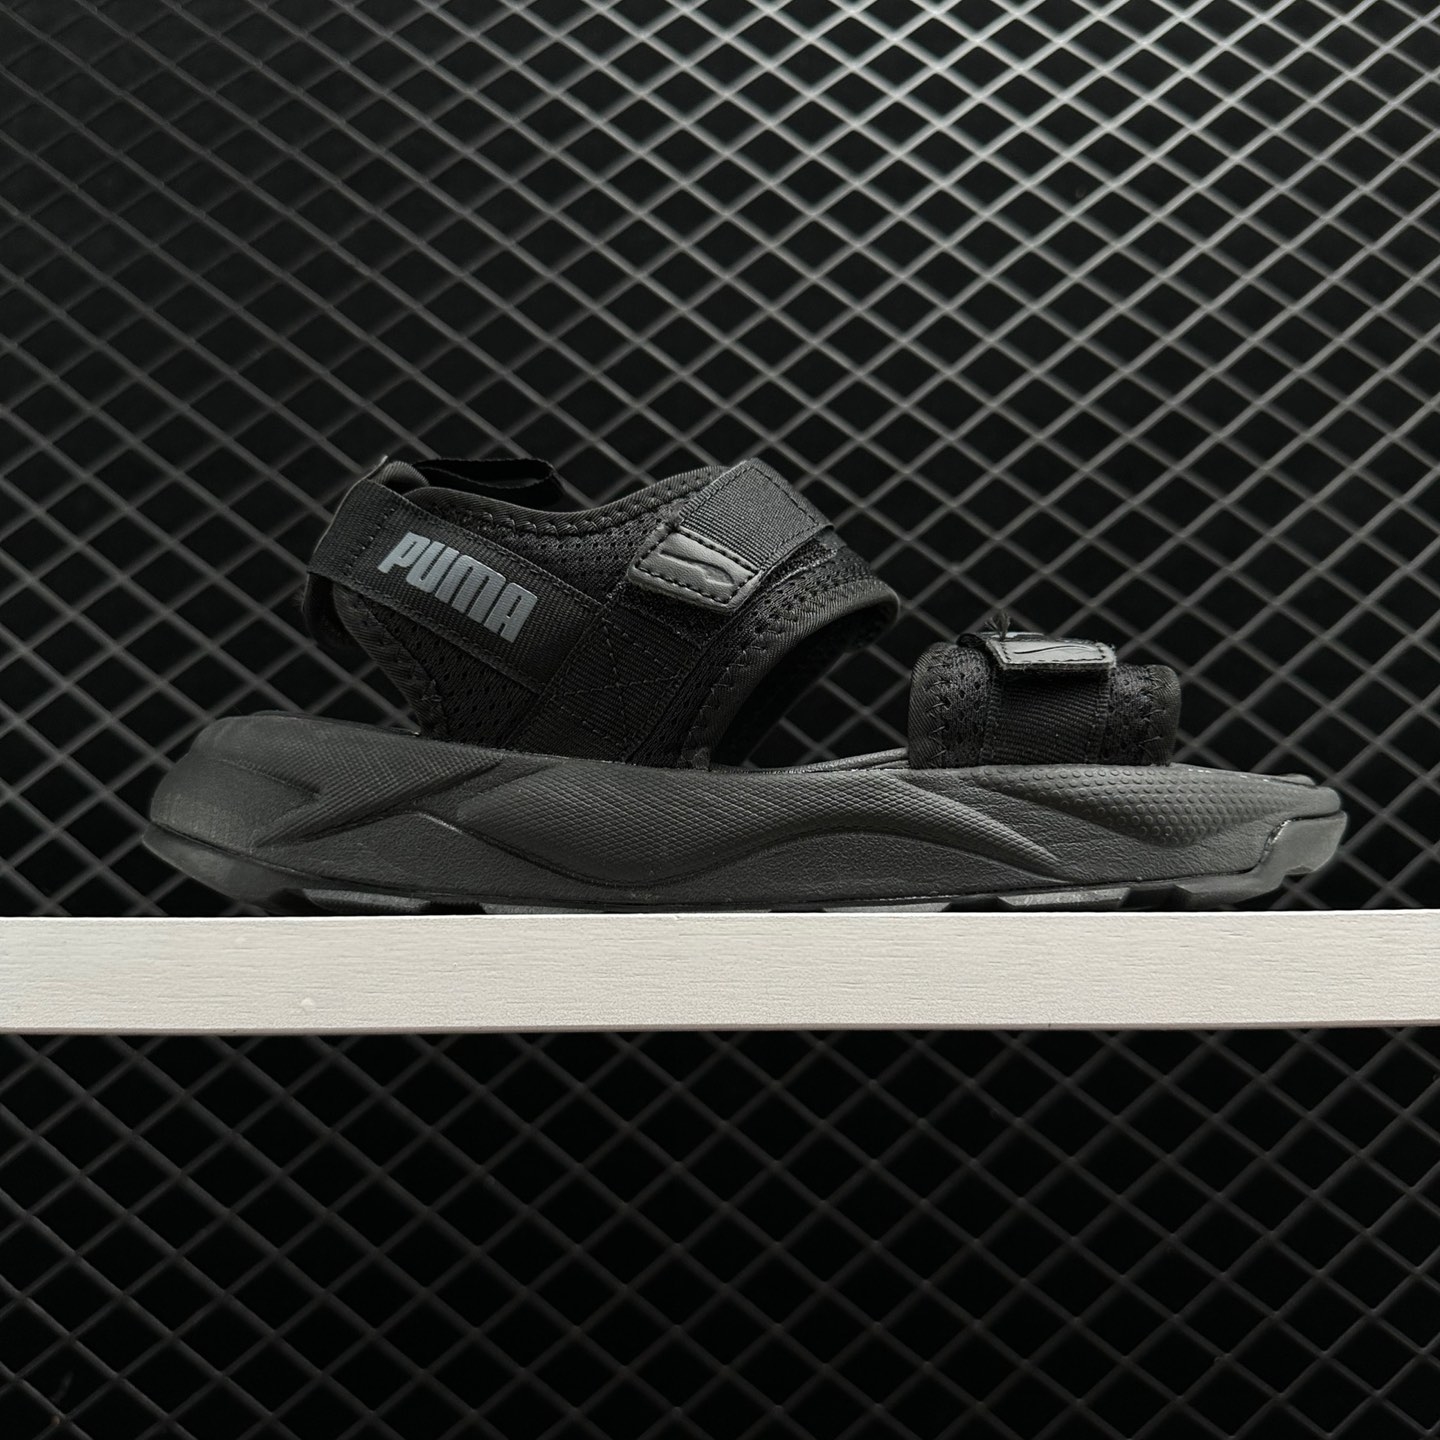 Puma RS-Sandal 'Black High Rise' 374862 02 - Shop Now for Sleek Style